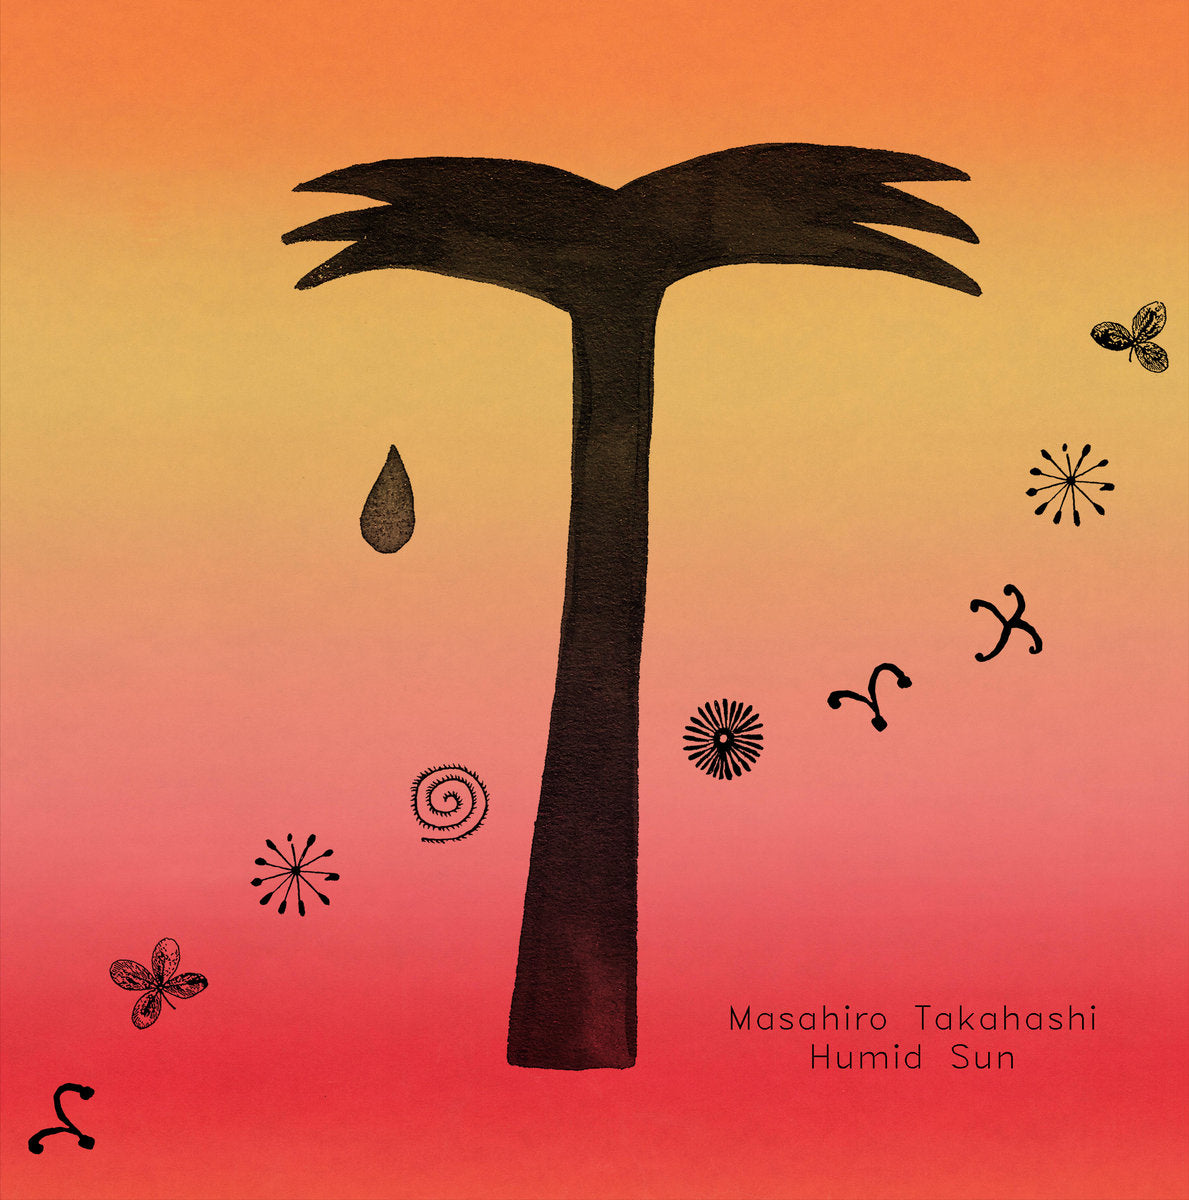 MASAHIRO TAKAHASHI - HUMID SUN Vinyl LP